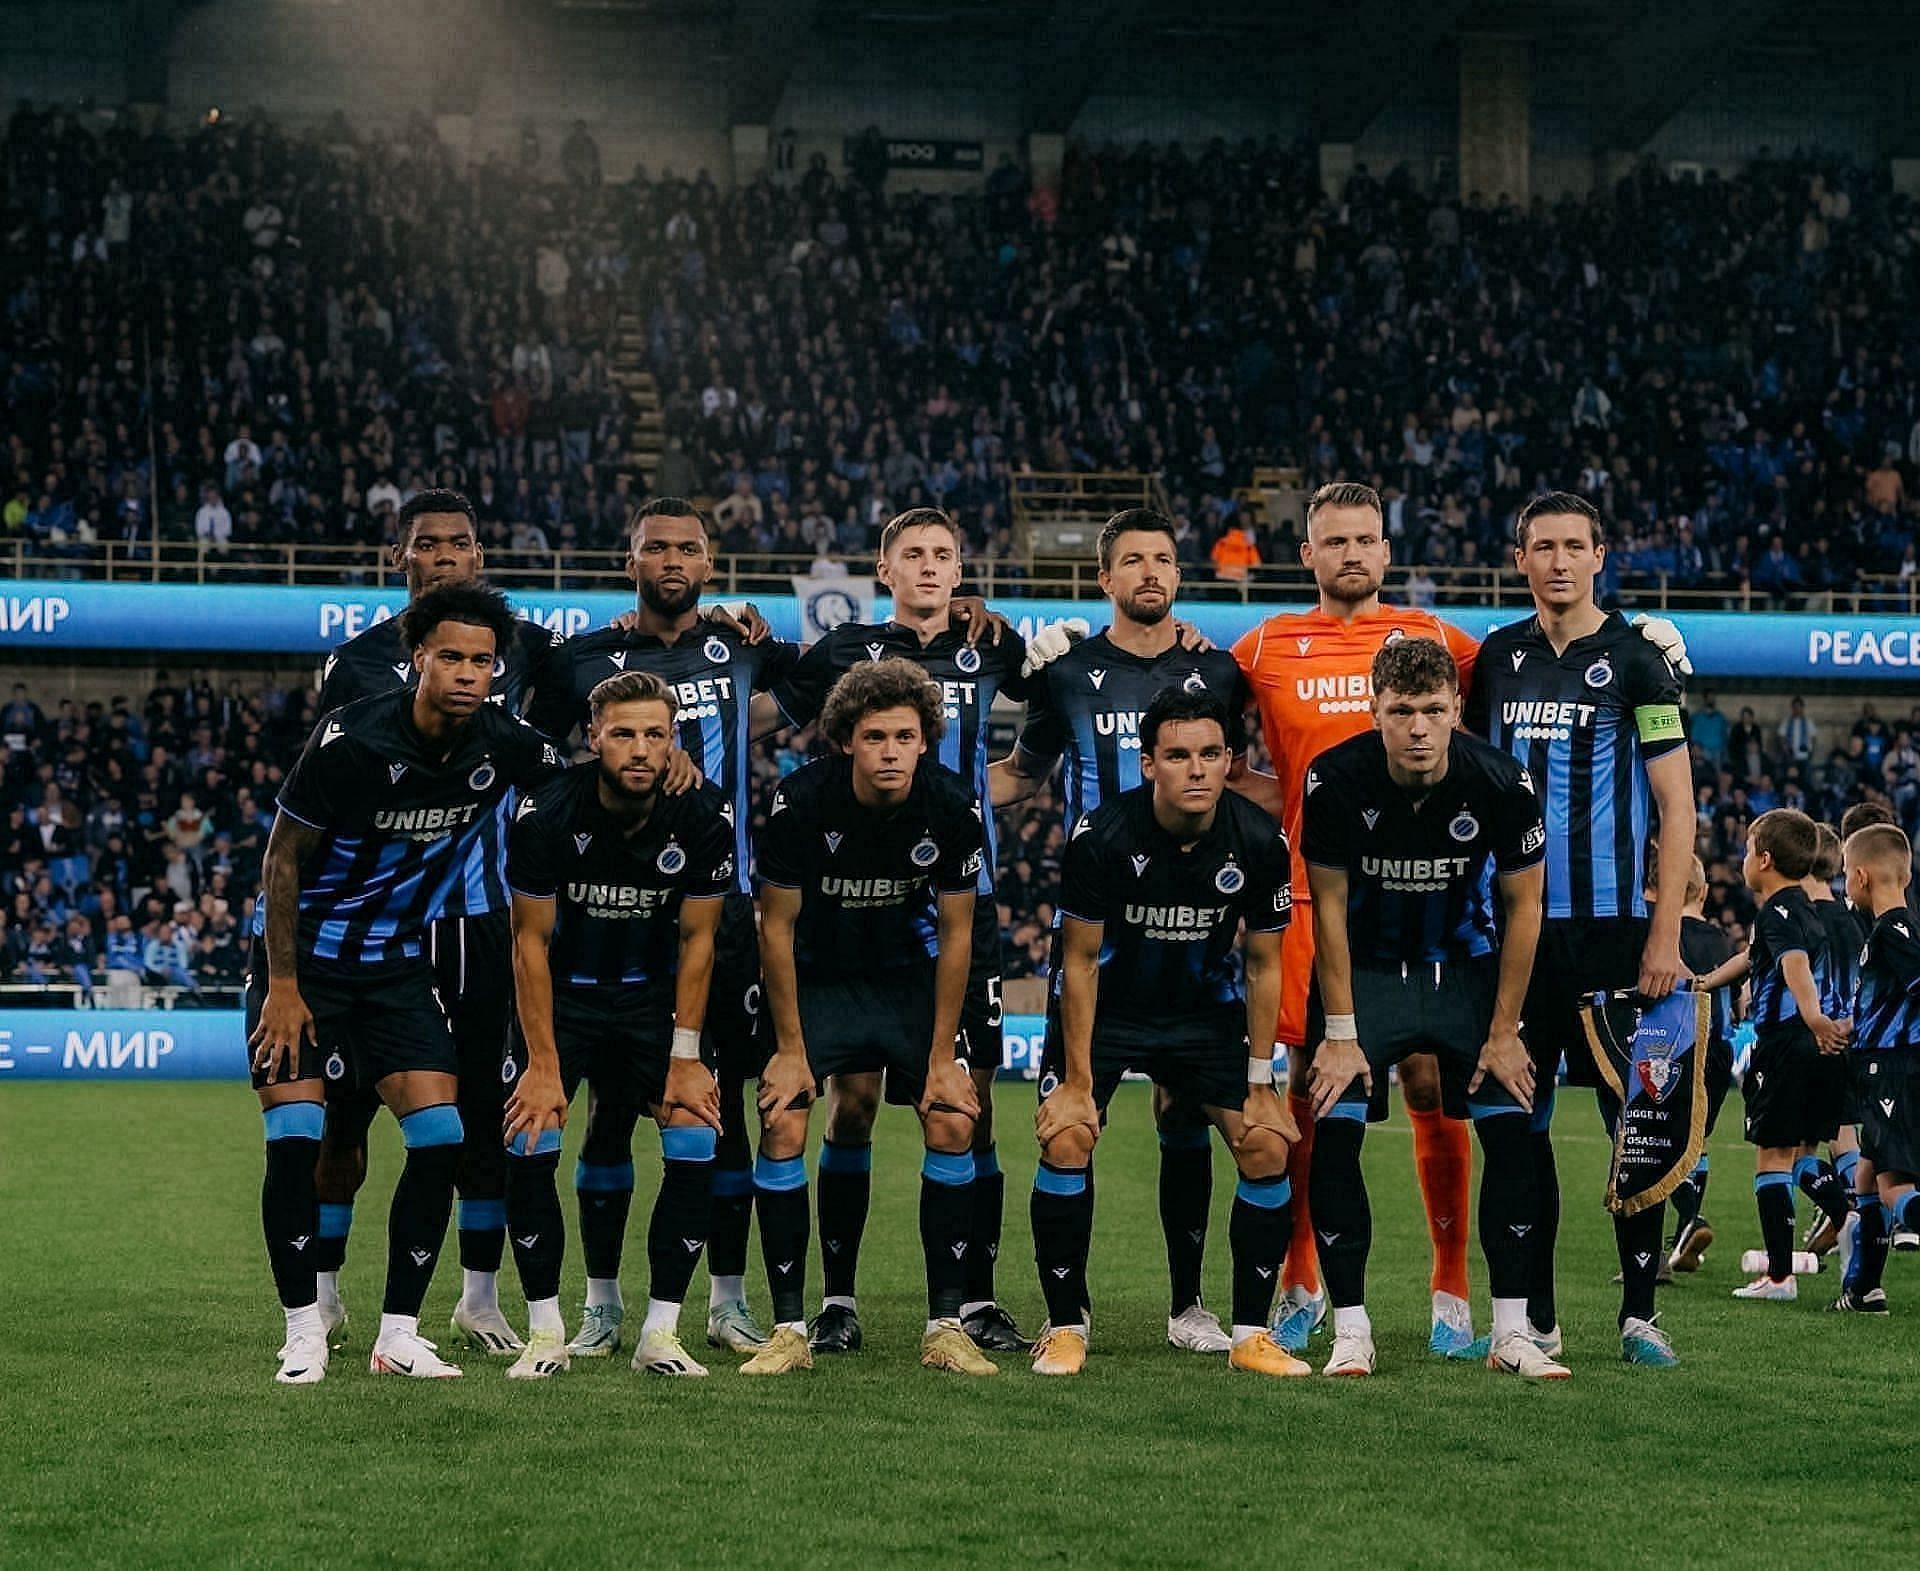 Club Brugge will host Lugano on Thursday 